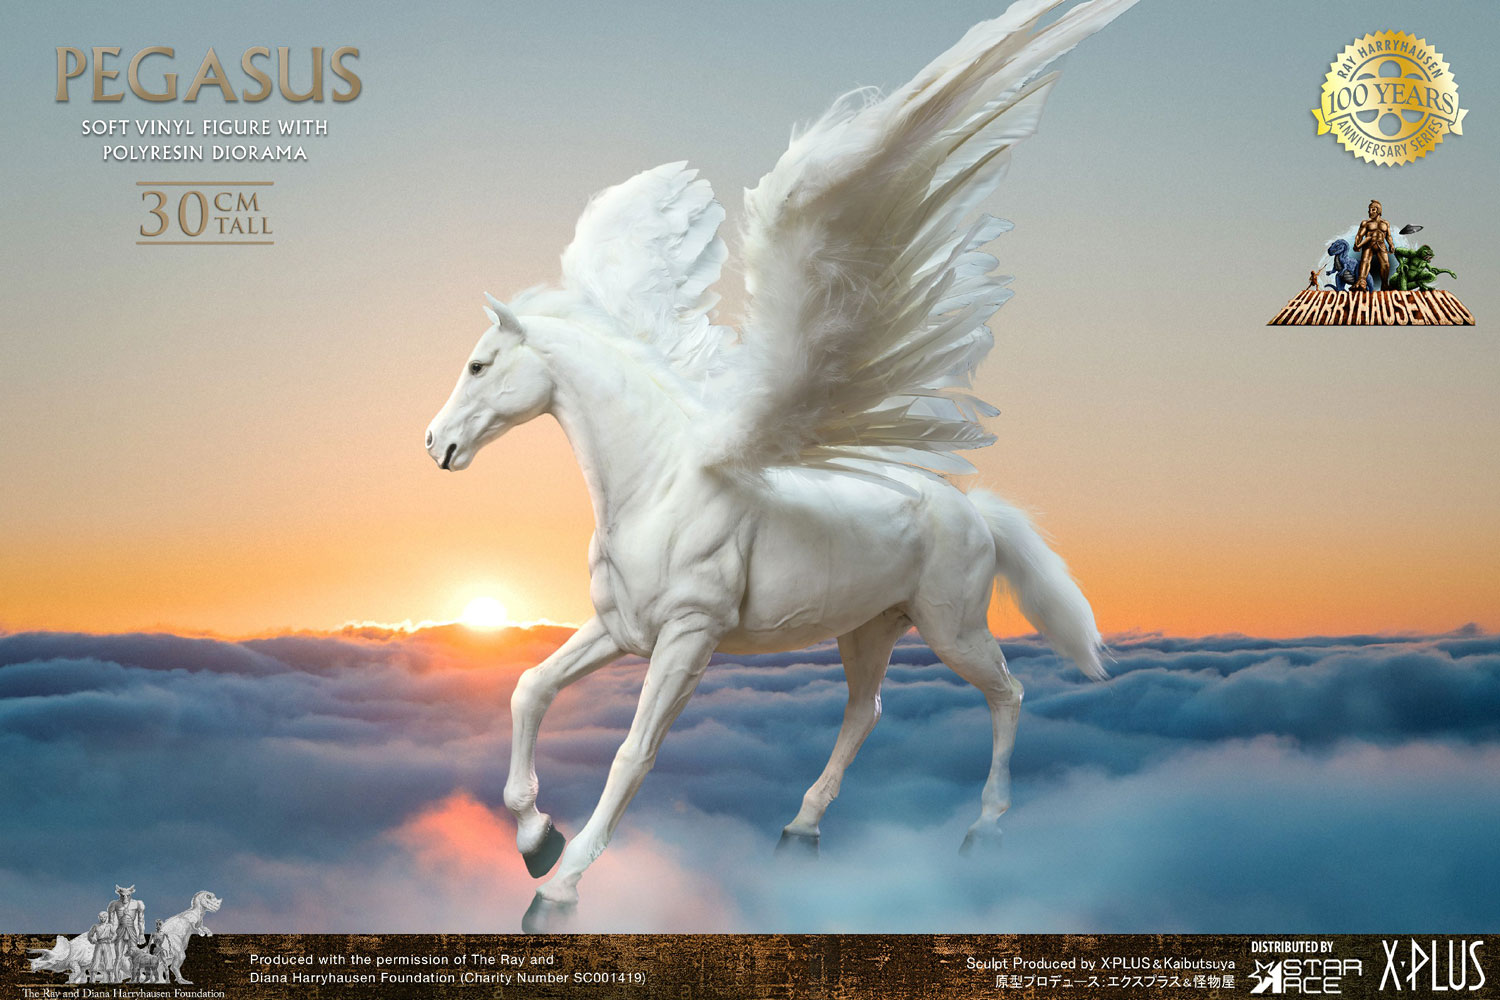 Pegasus Collector Edition (Prototype Shown) View 2